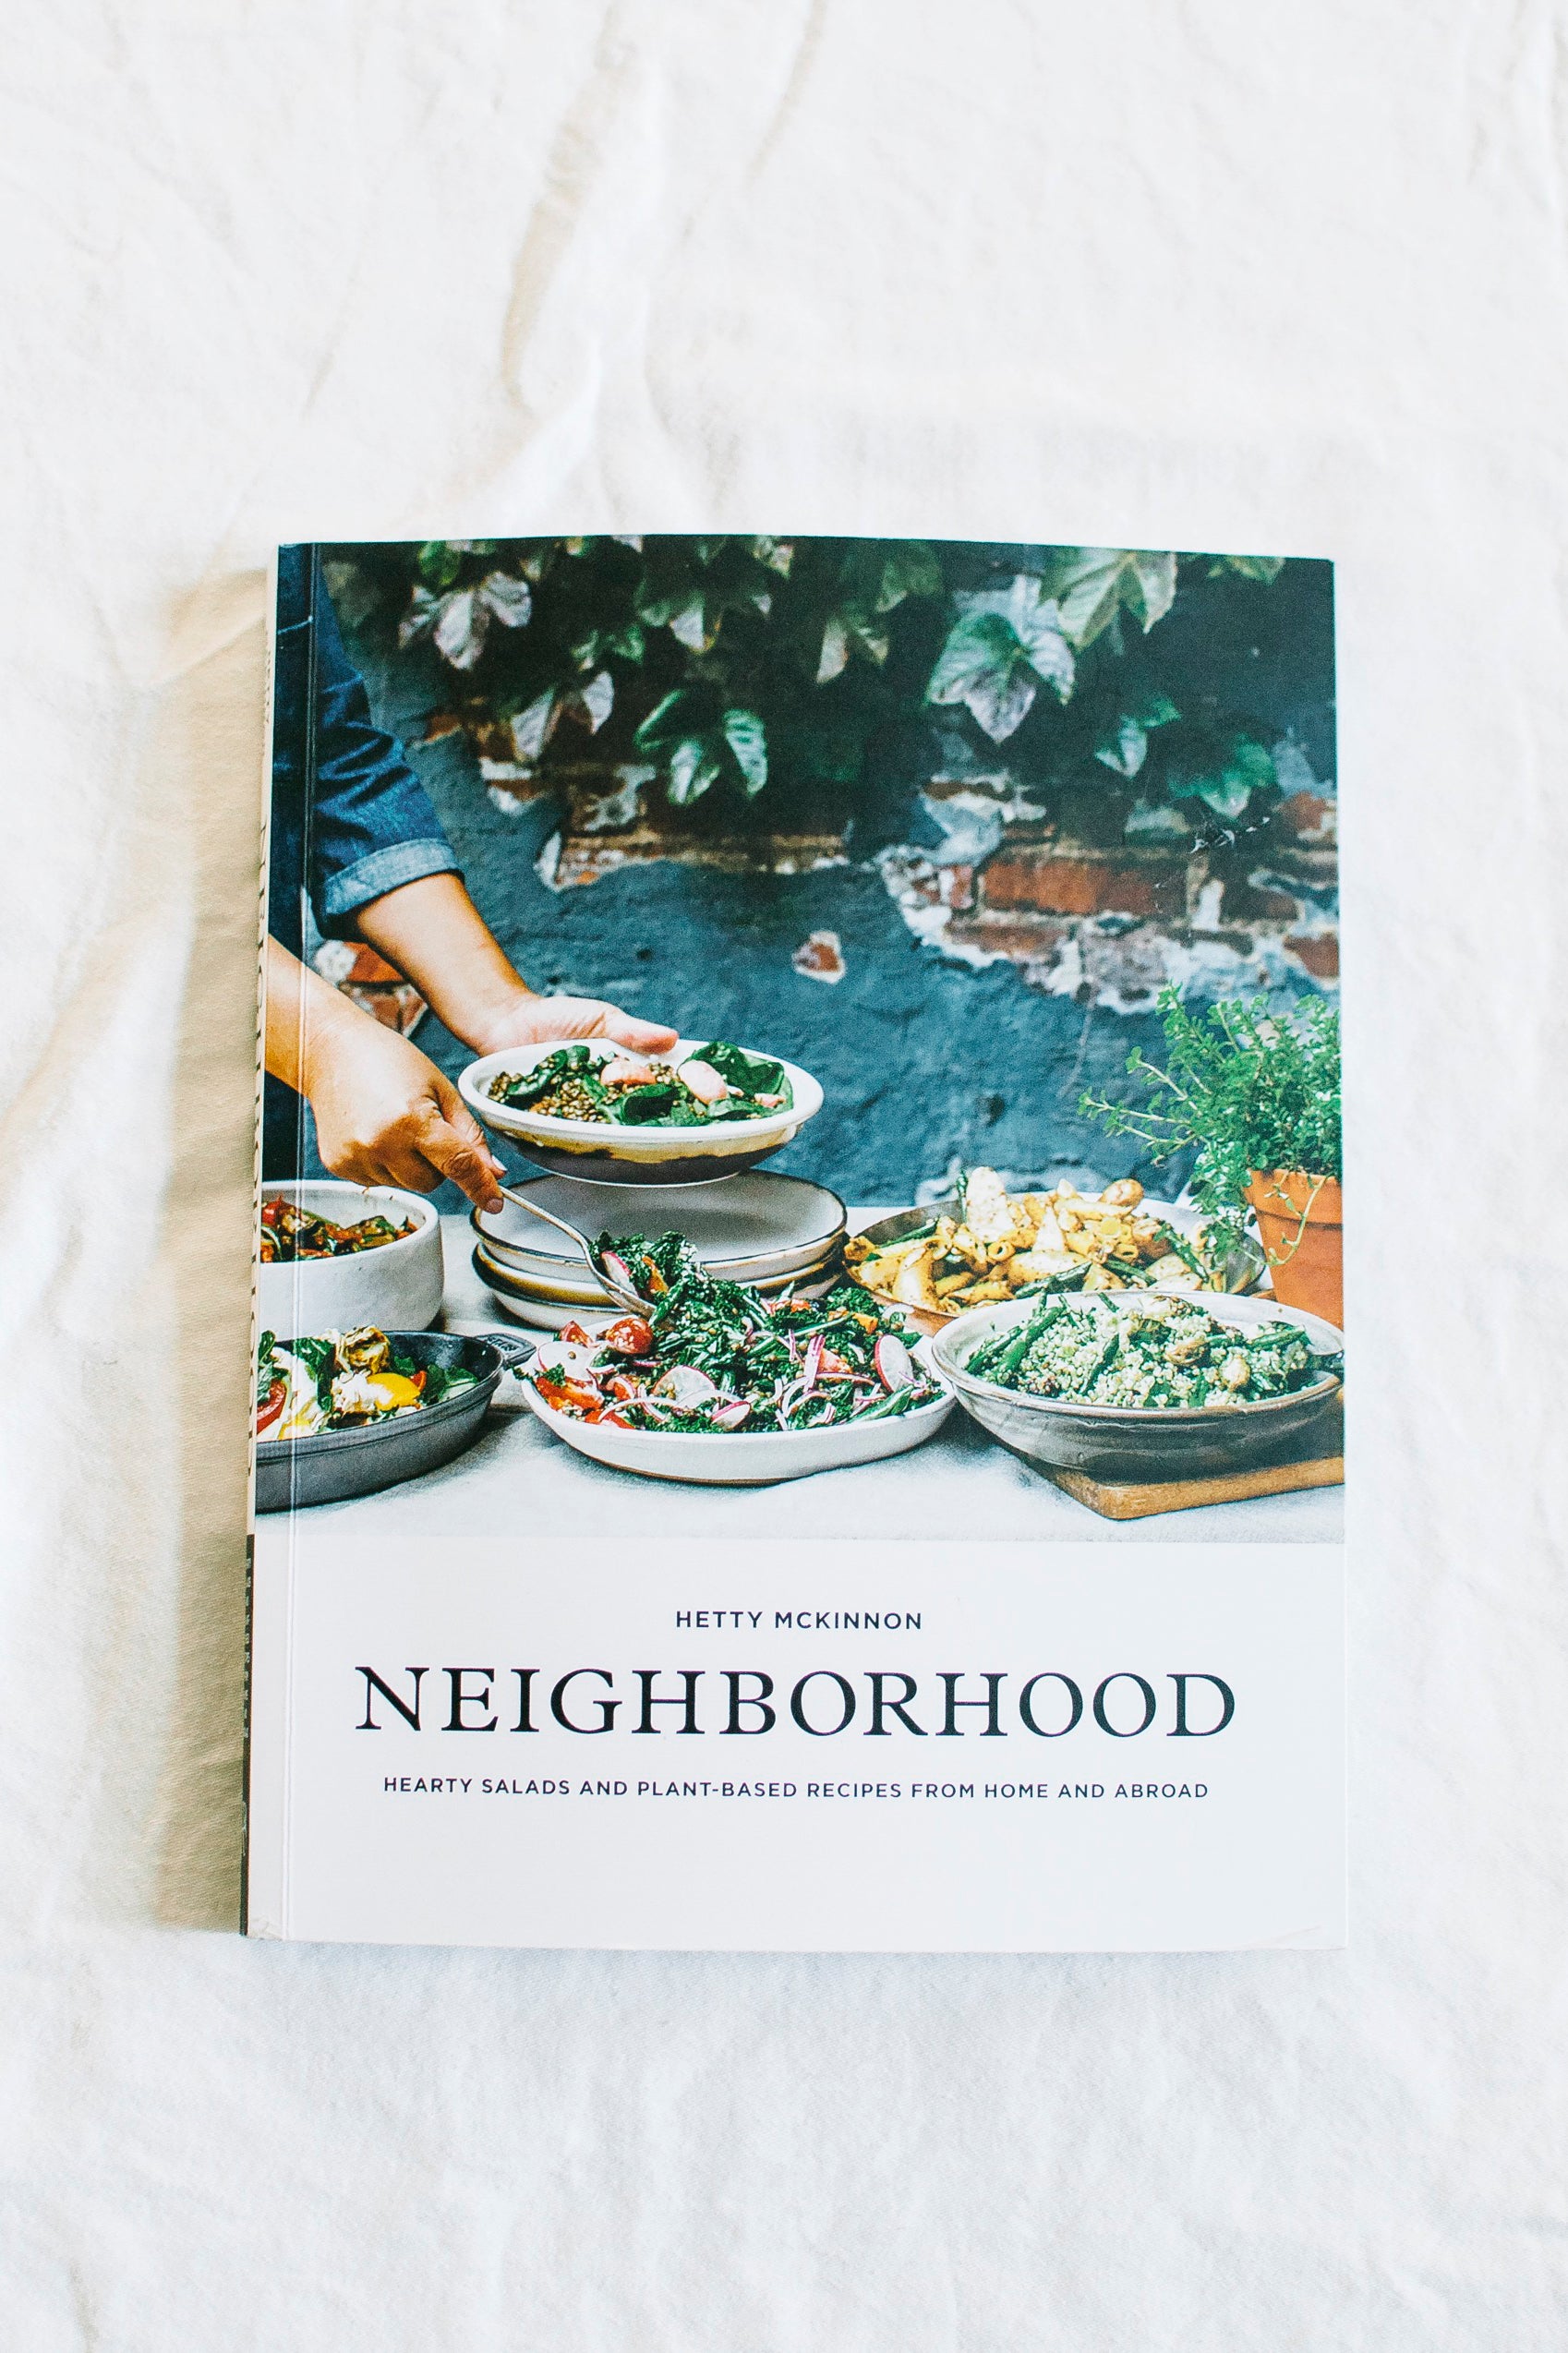 book review: neighborhood by hetty mckinnon